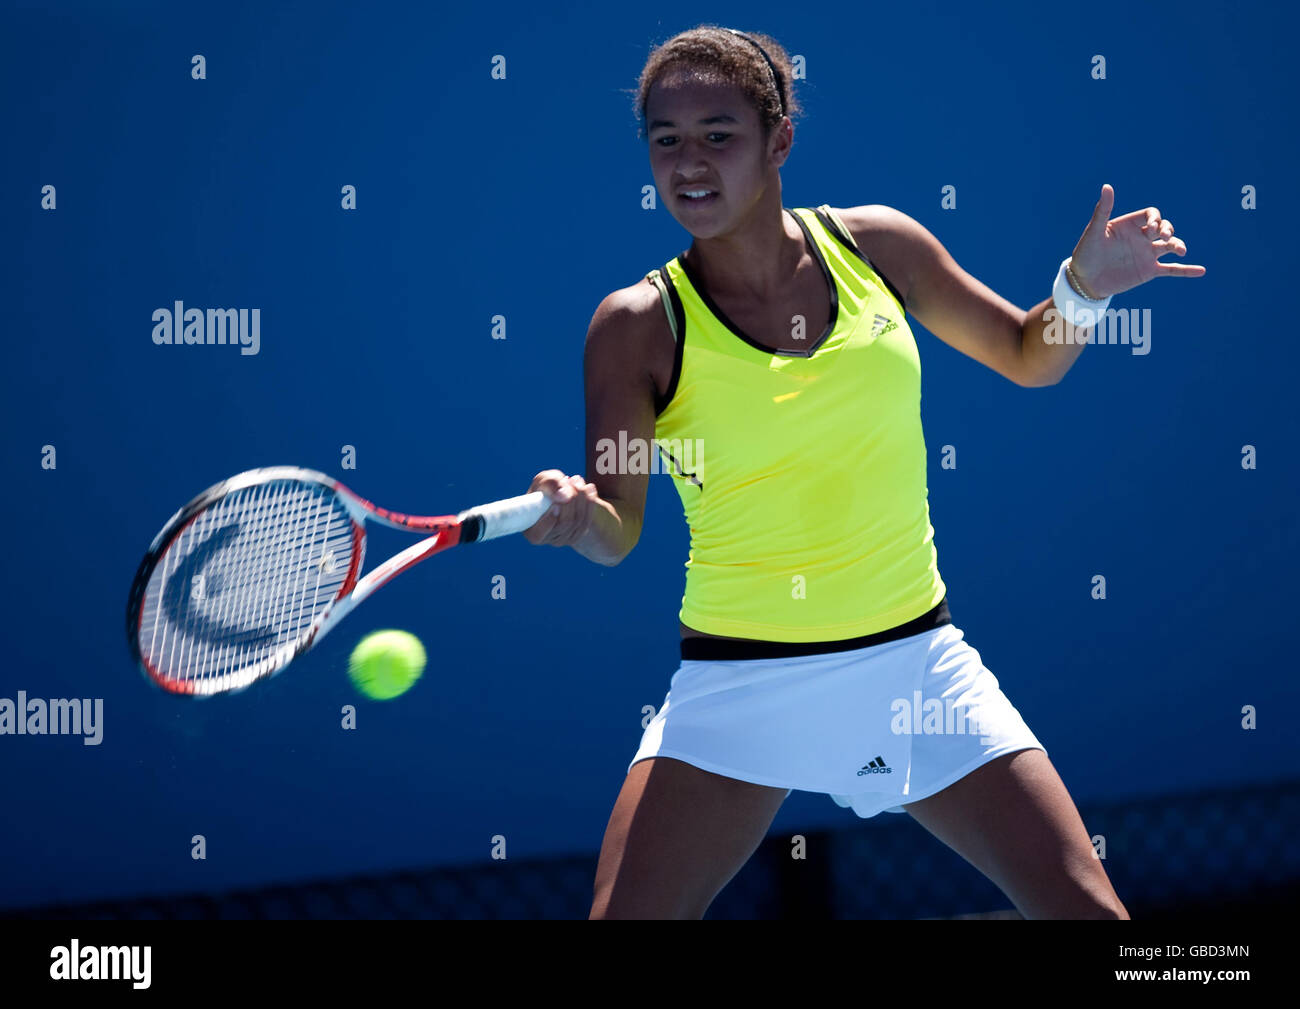 Heather Watson Tennis Player en action Photo Stock - Alamy